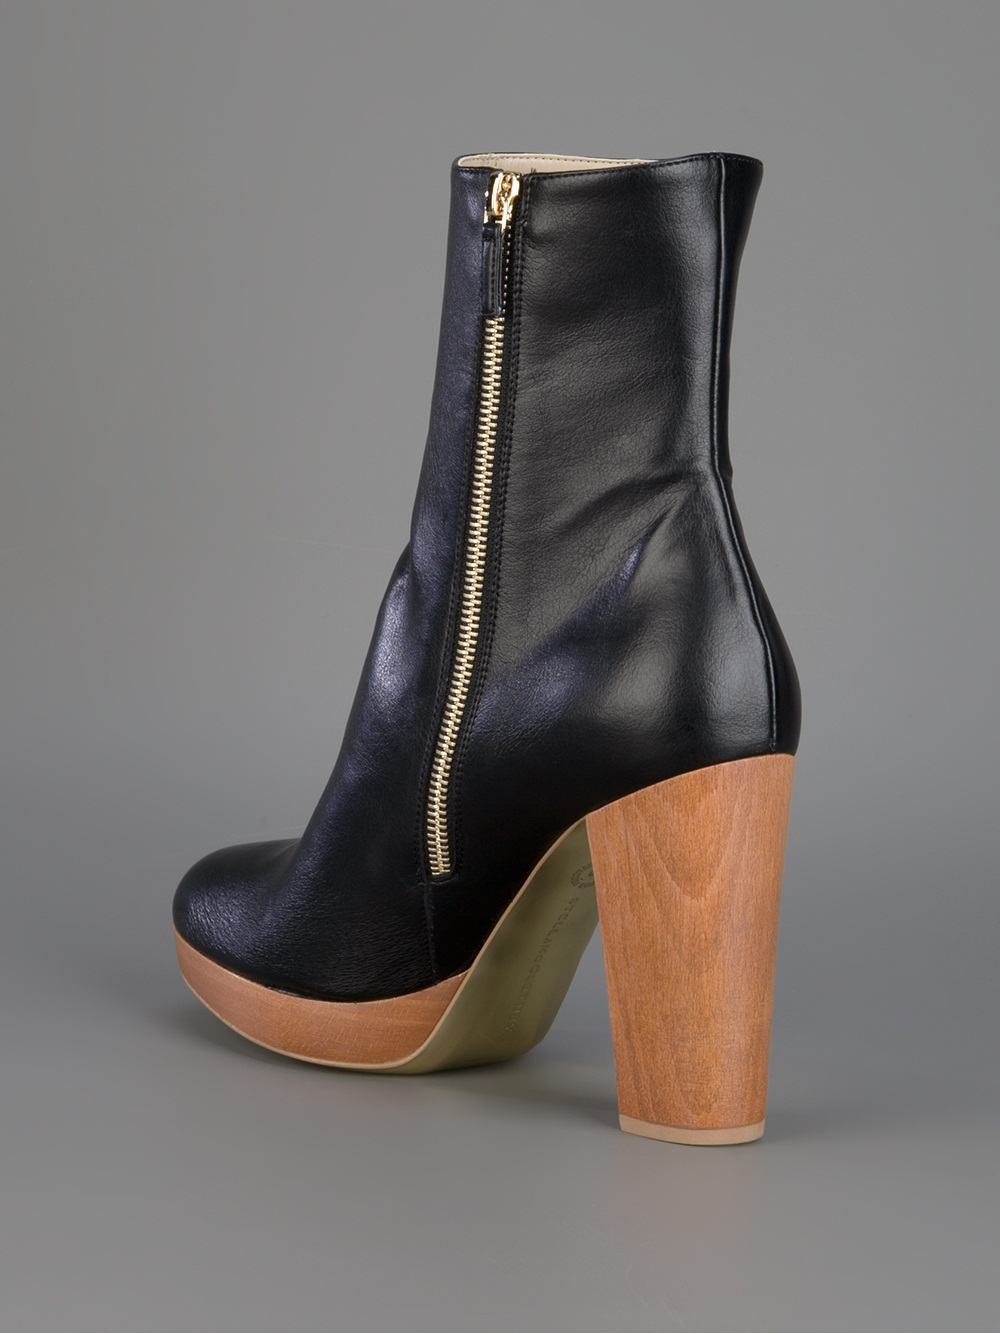 Stella McCartney Wooden Heel Boots in 